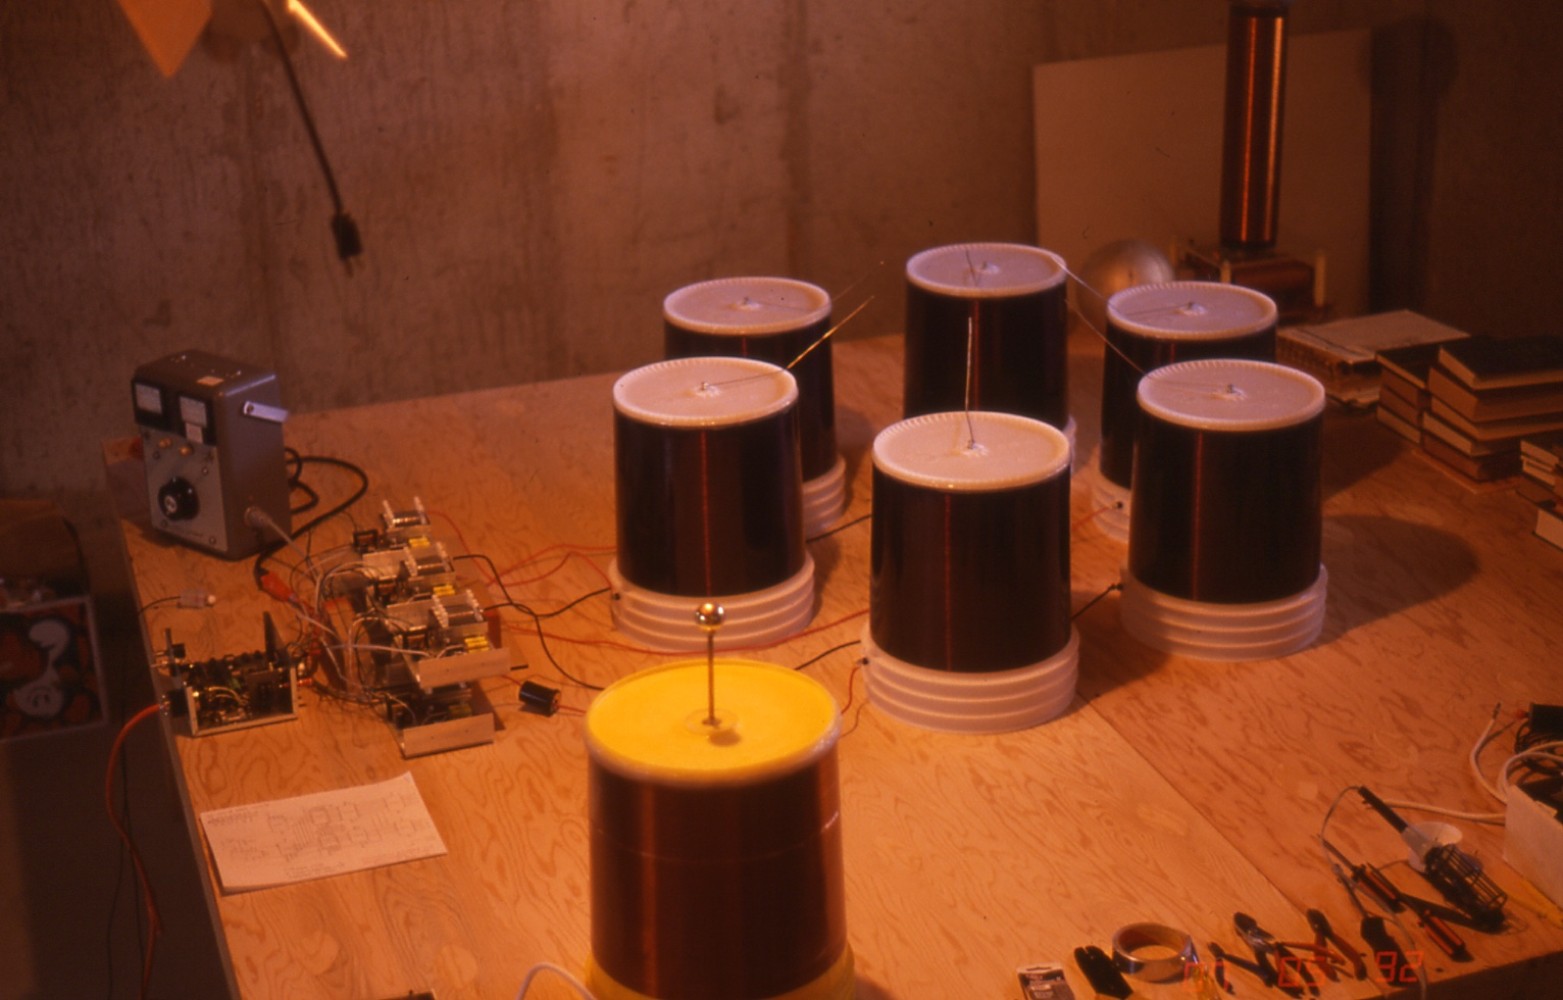 1992 3-phase Tesla coil sytem setup with 6 resonators